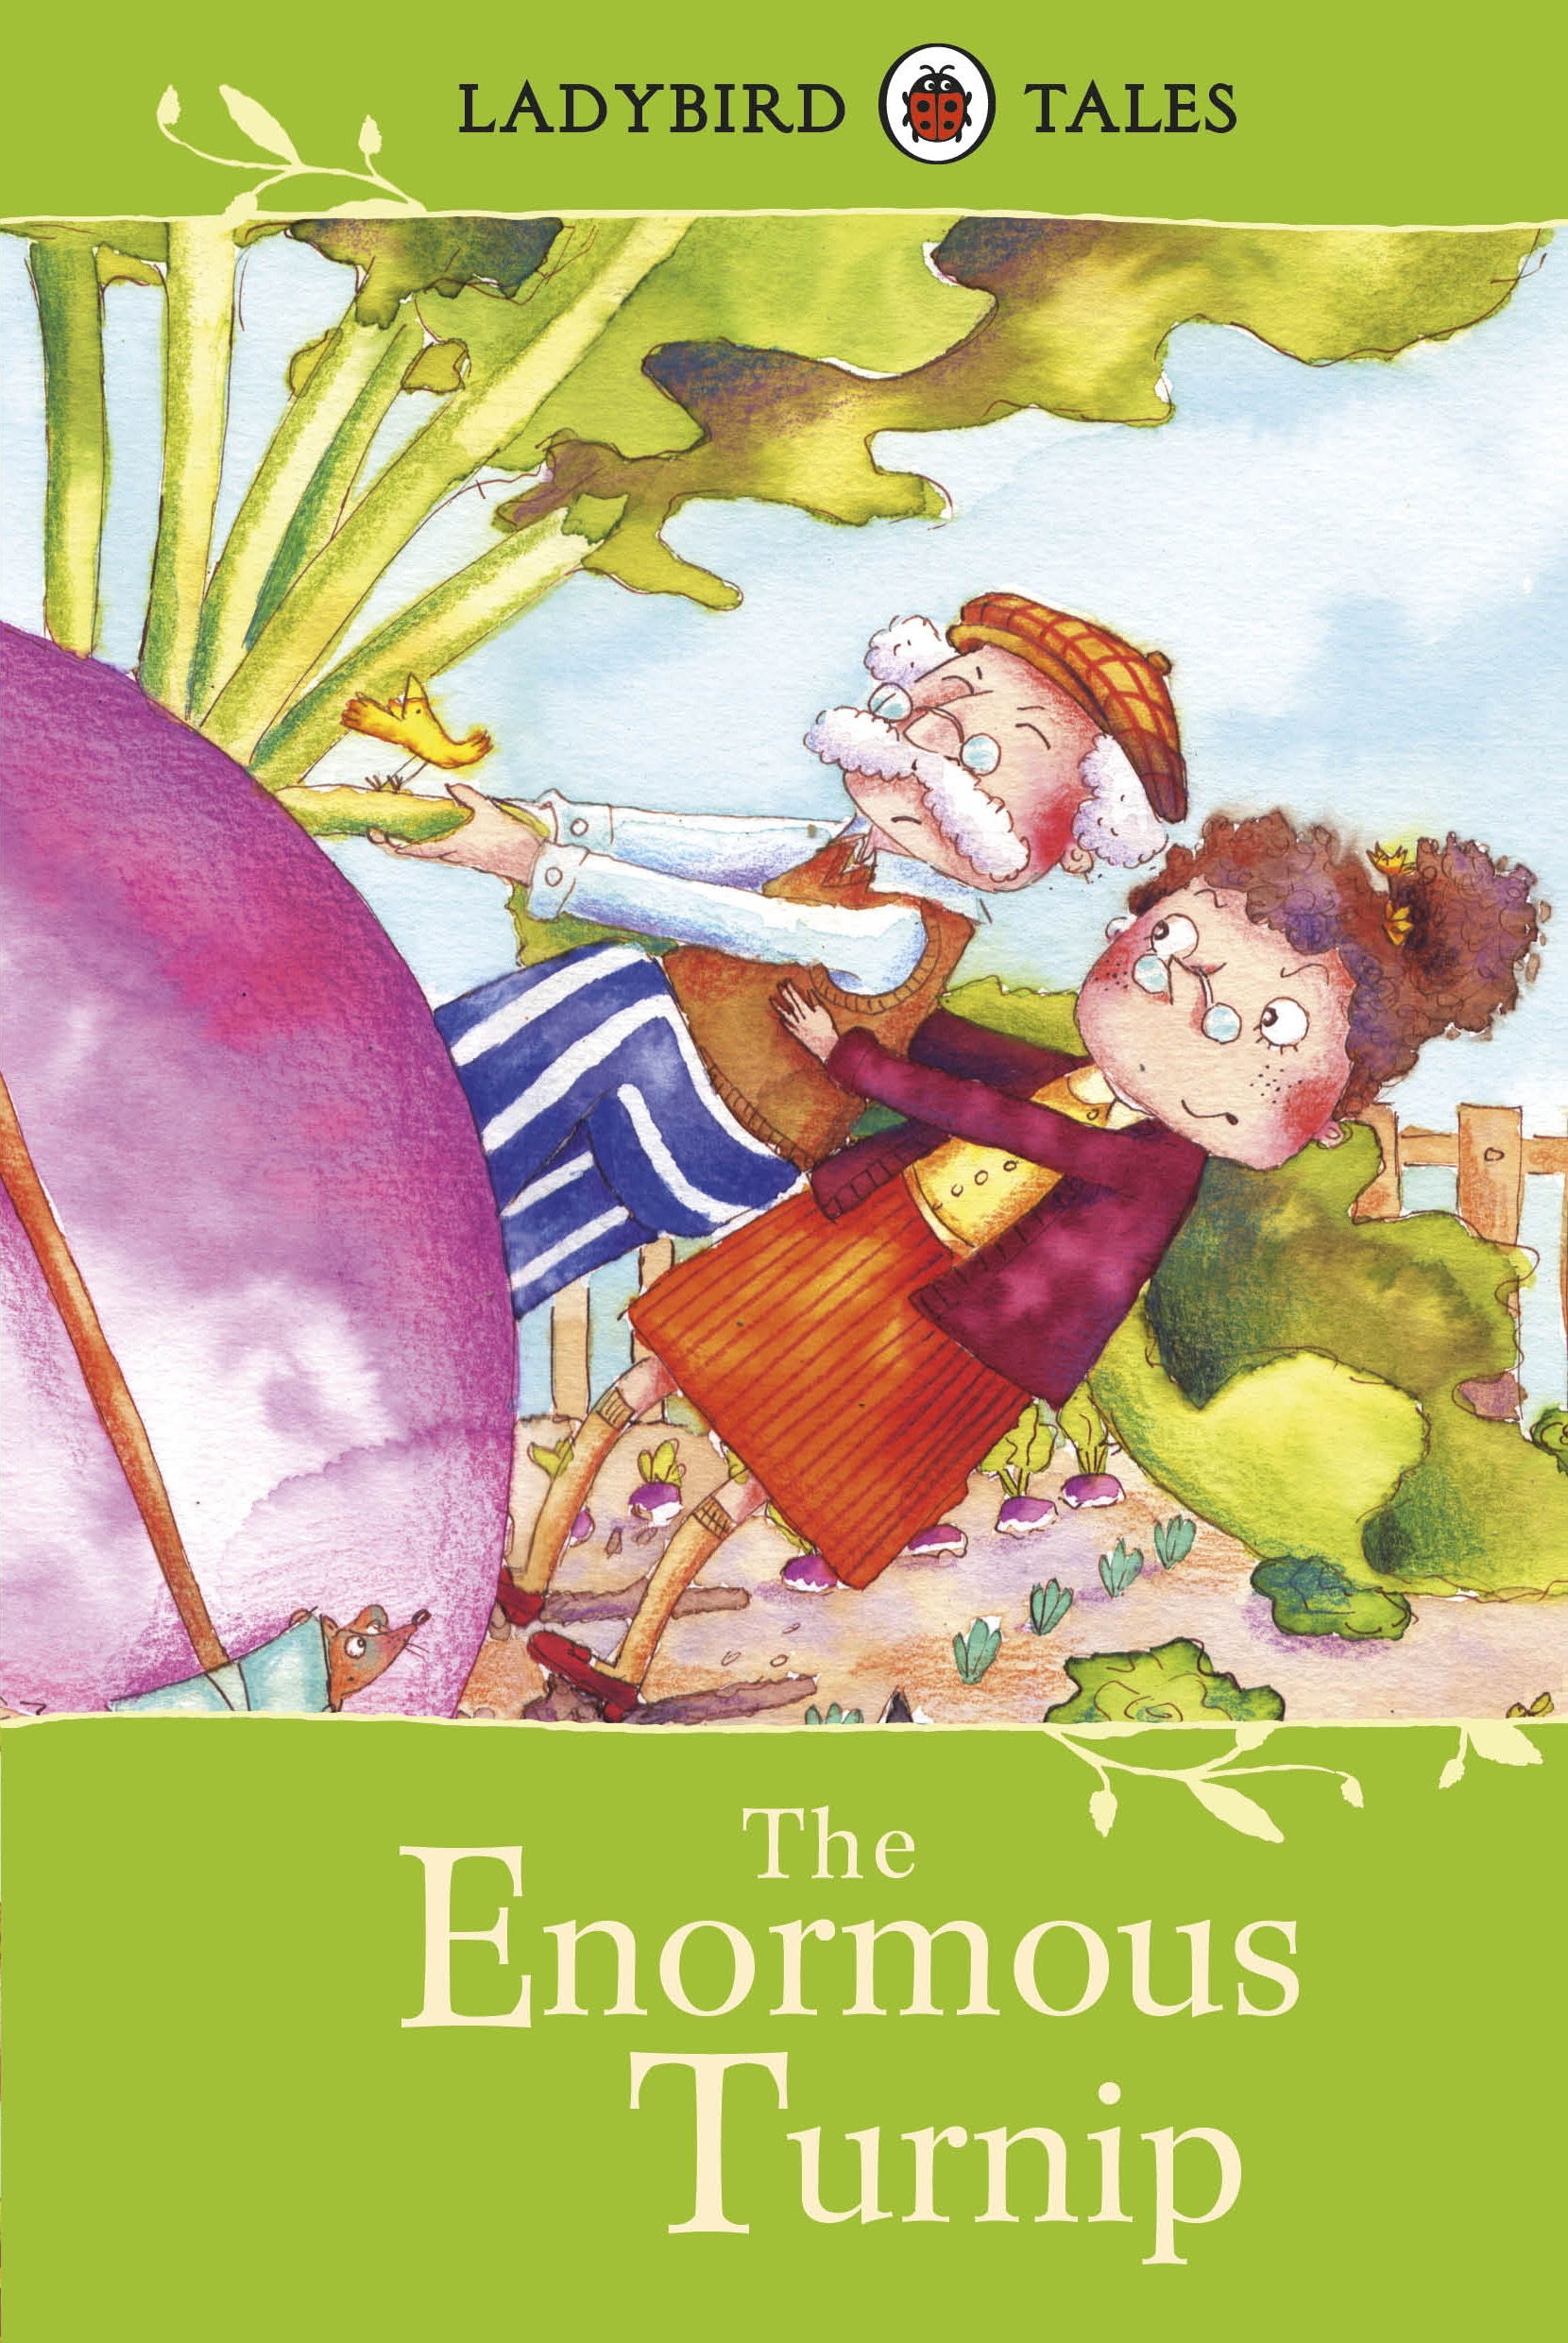 Ladybird Tales: The Enormous Turnip by Ladybird | Penguin Random ...